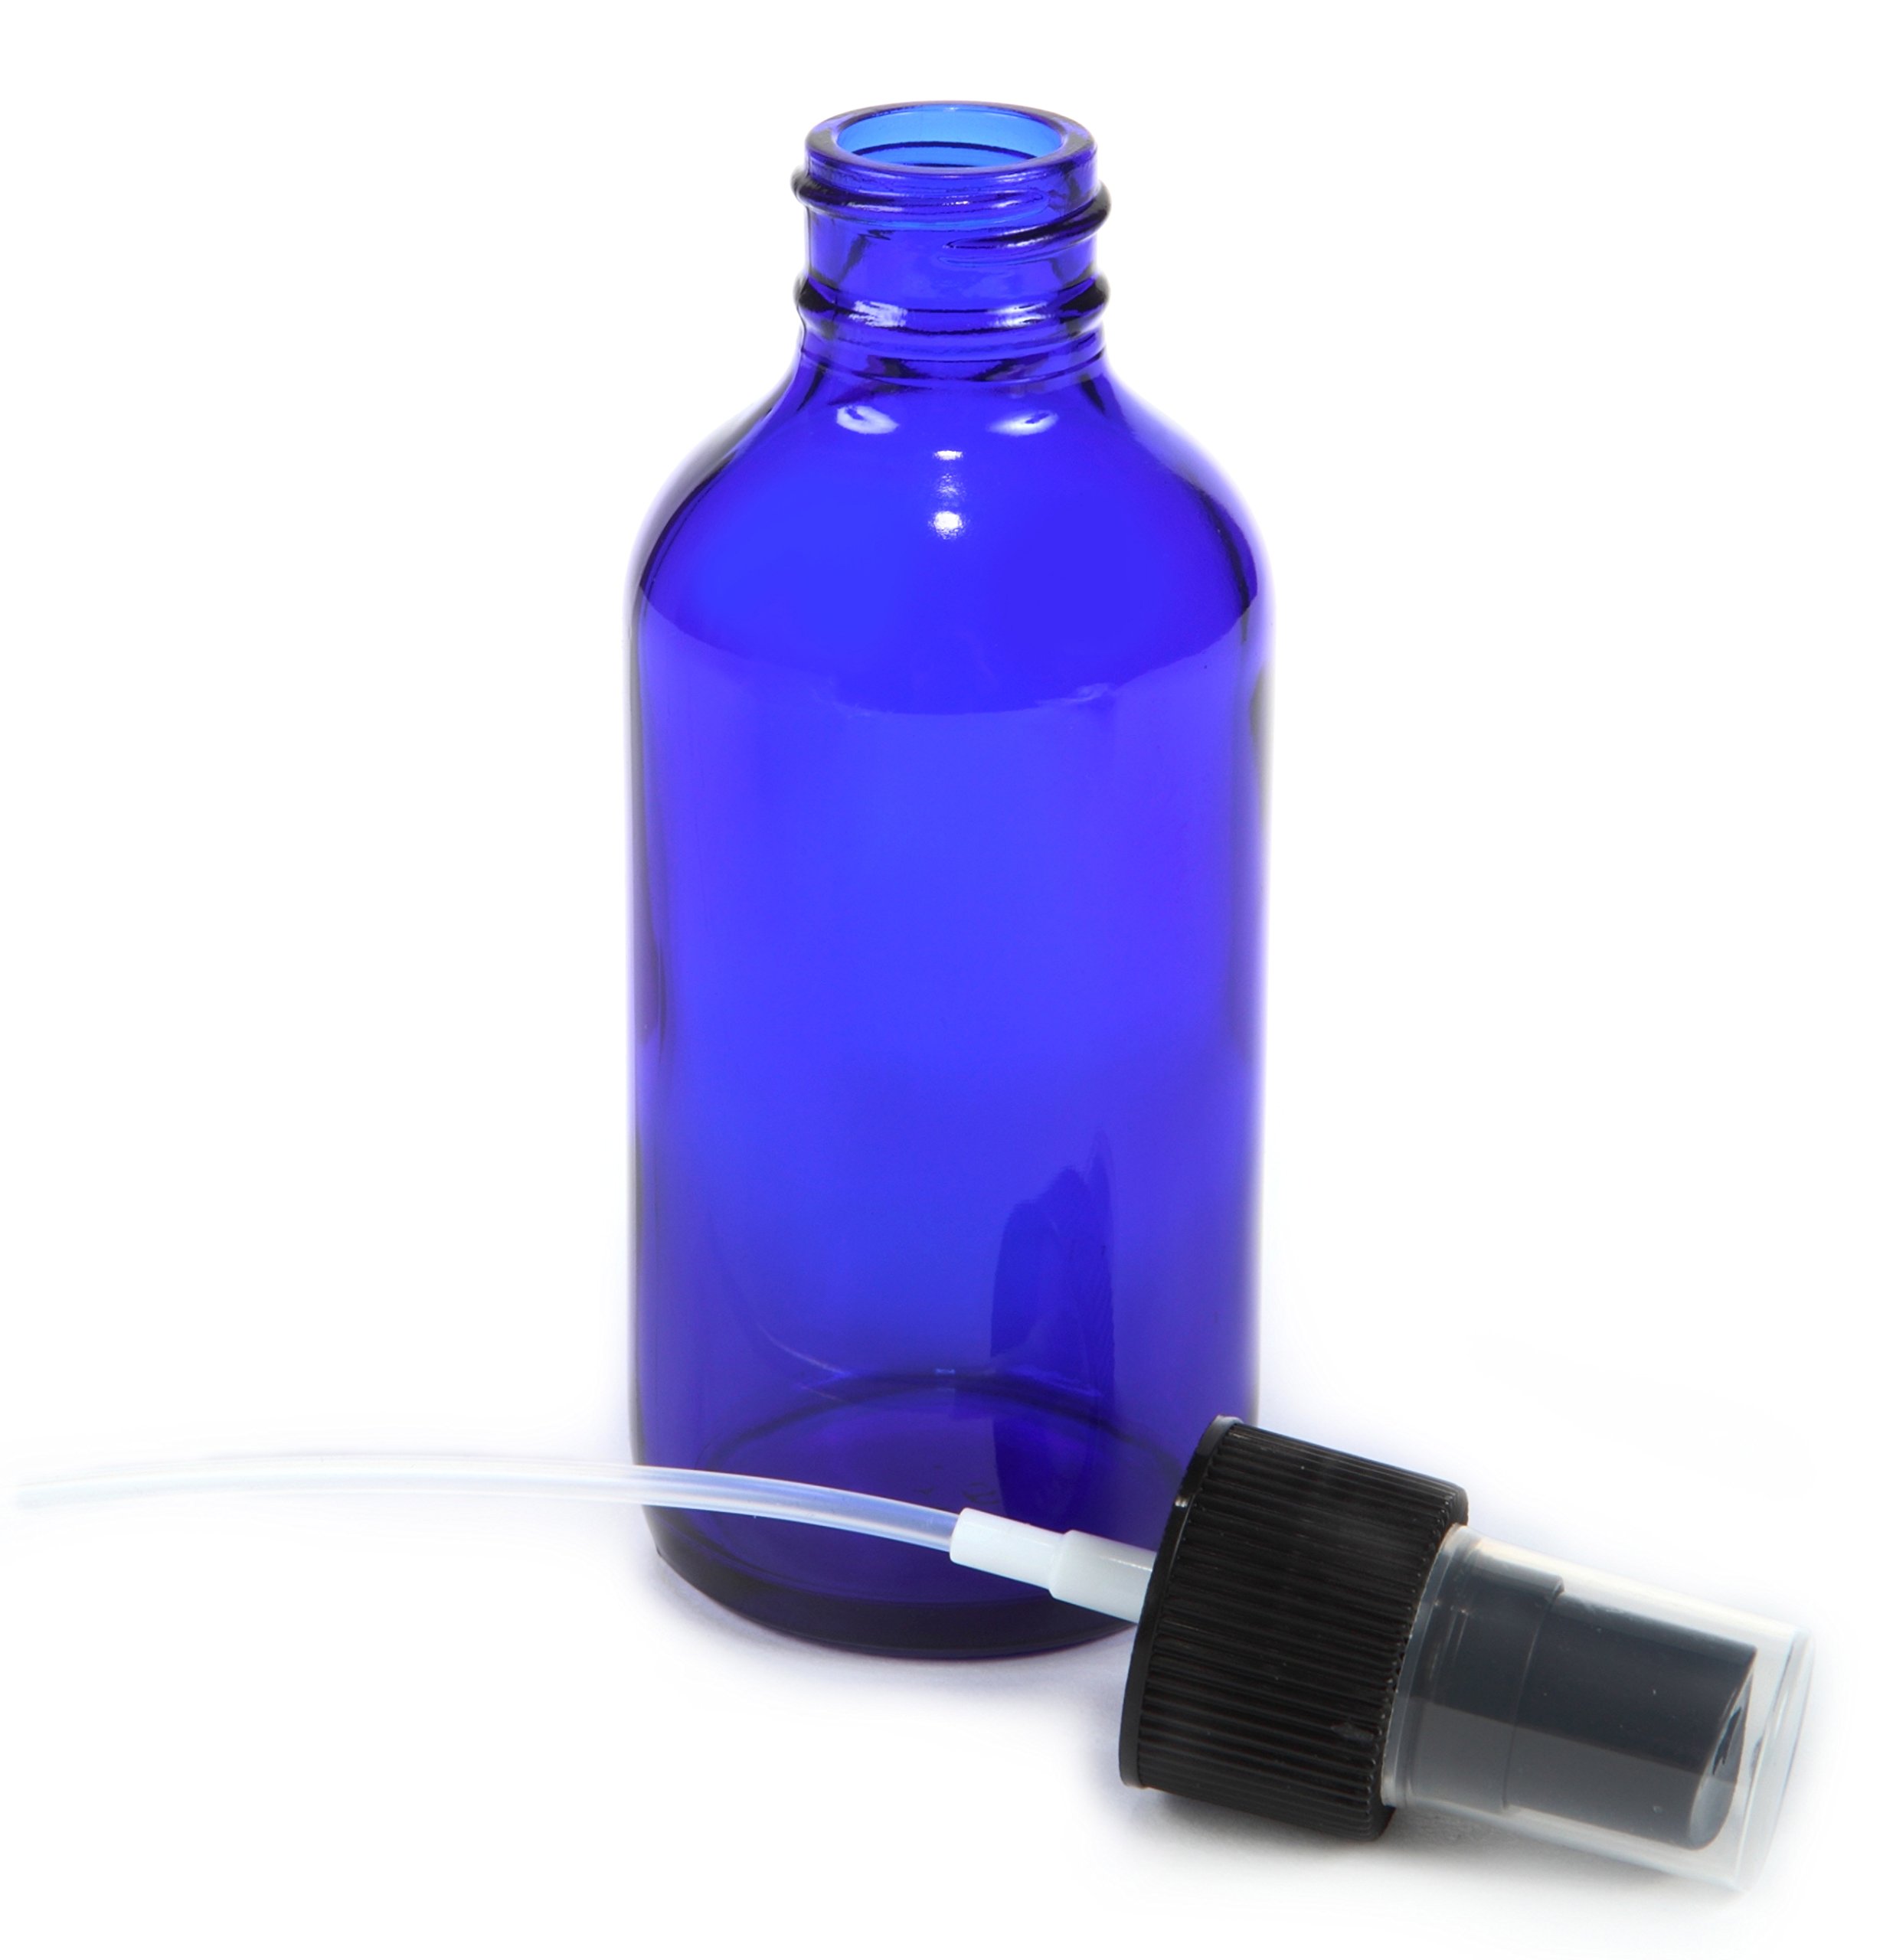 Vivaplex 6 pieces, Cobalt Blue, 4 oz Glass Bottles, with Black Fine Mist Sprayer